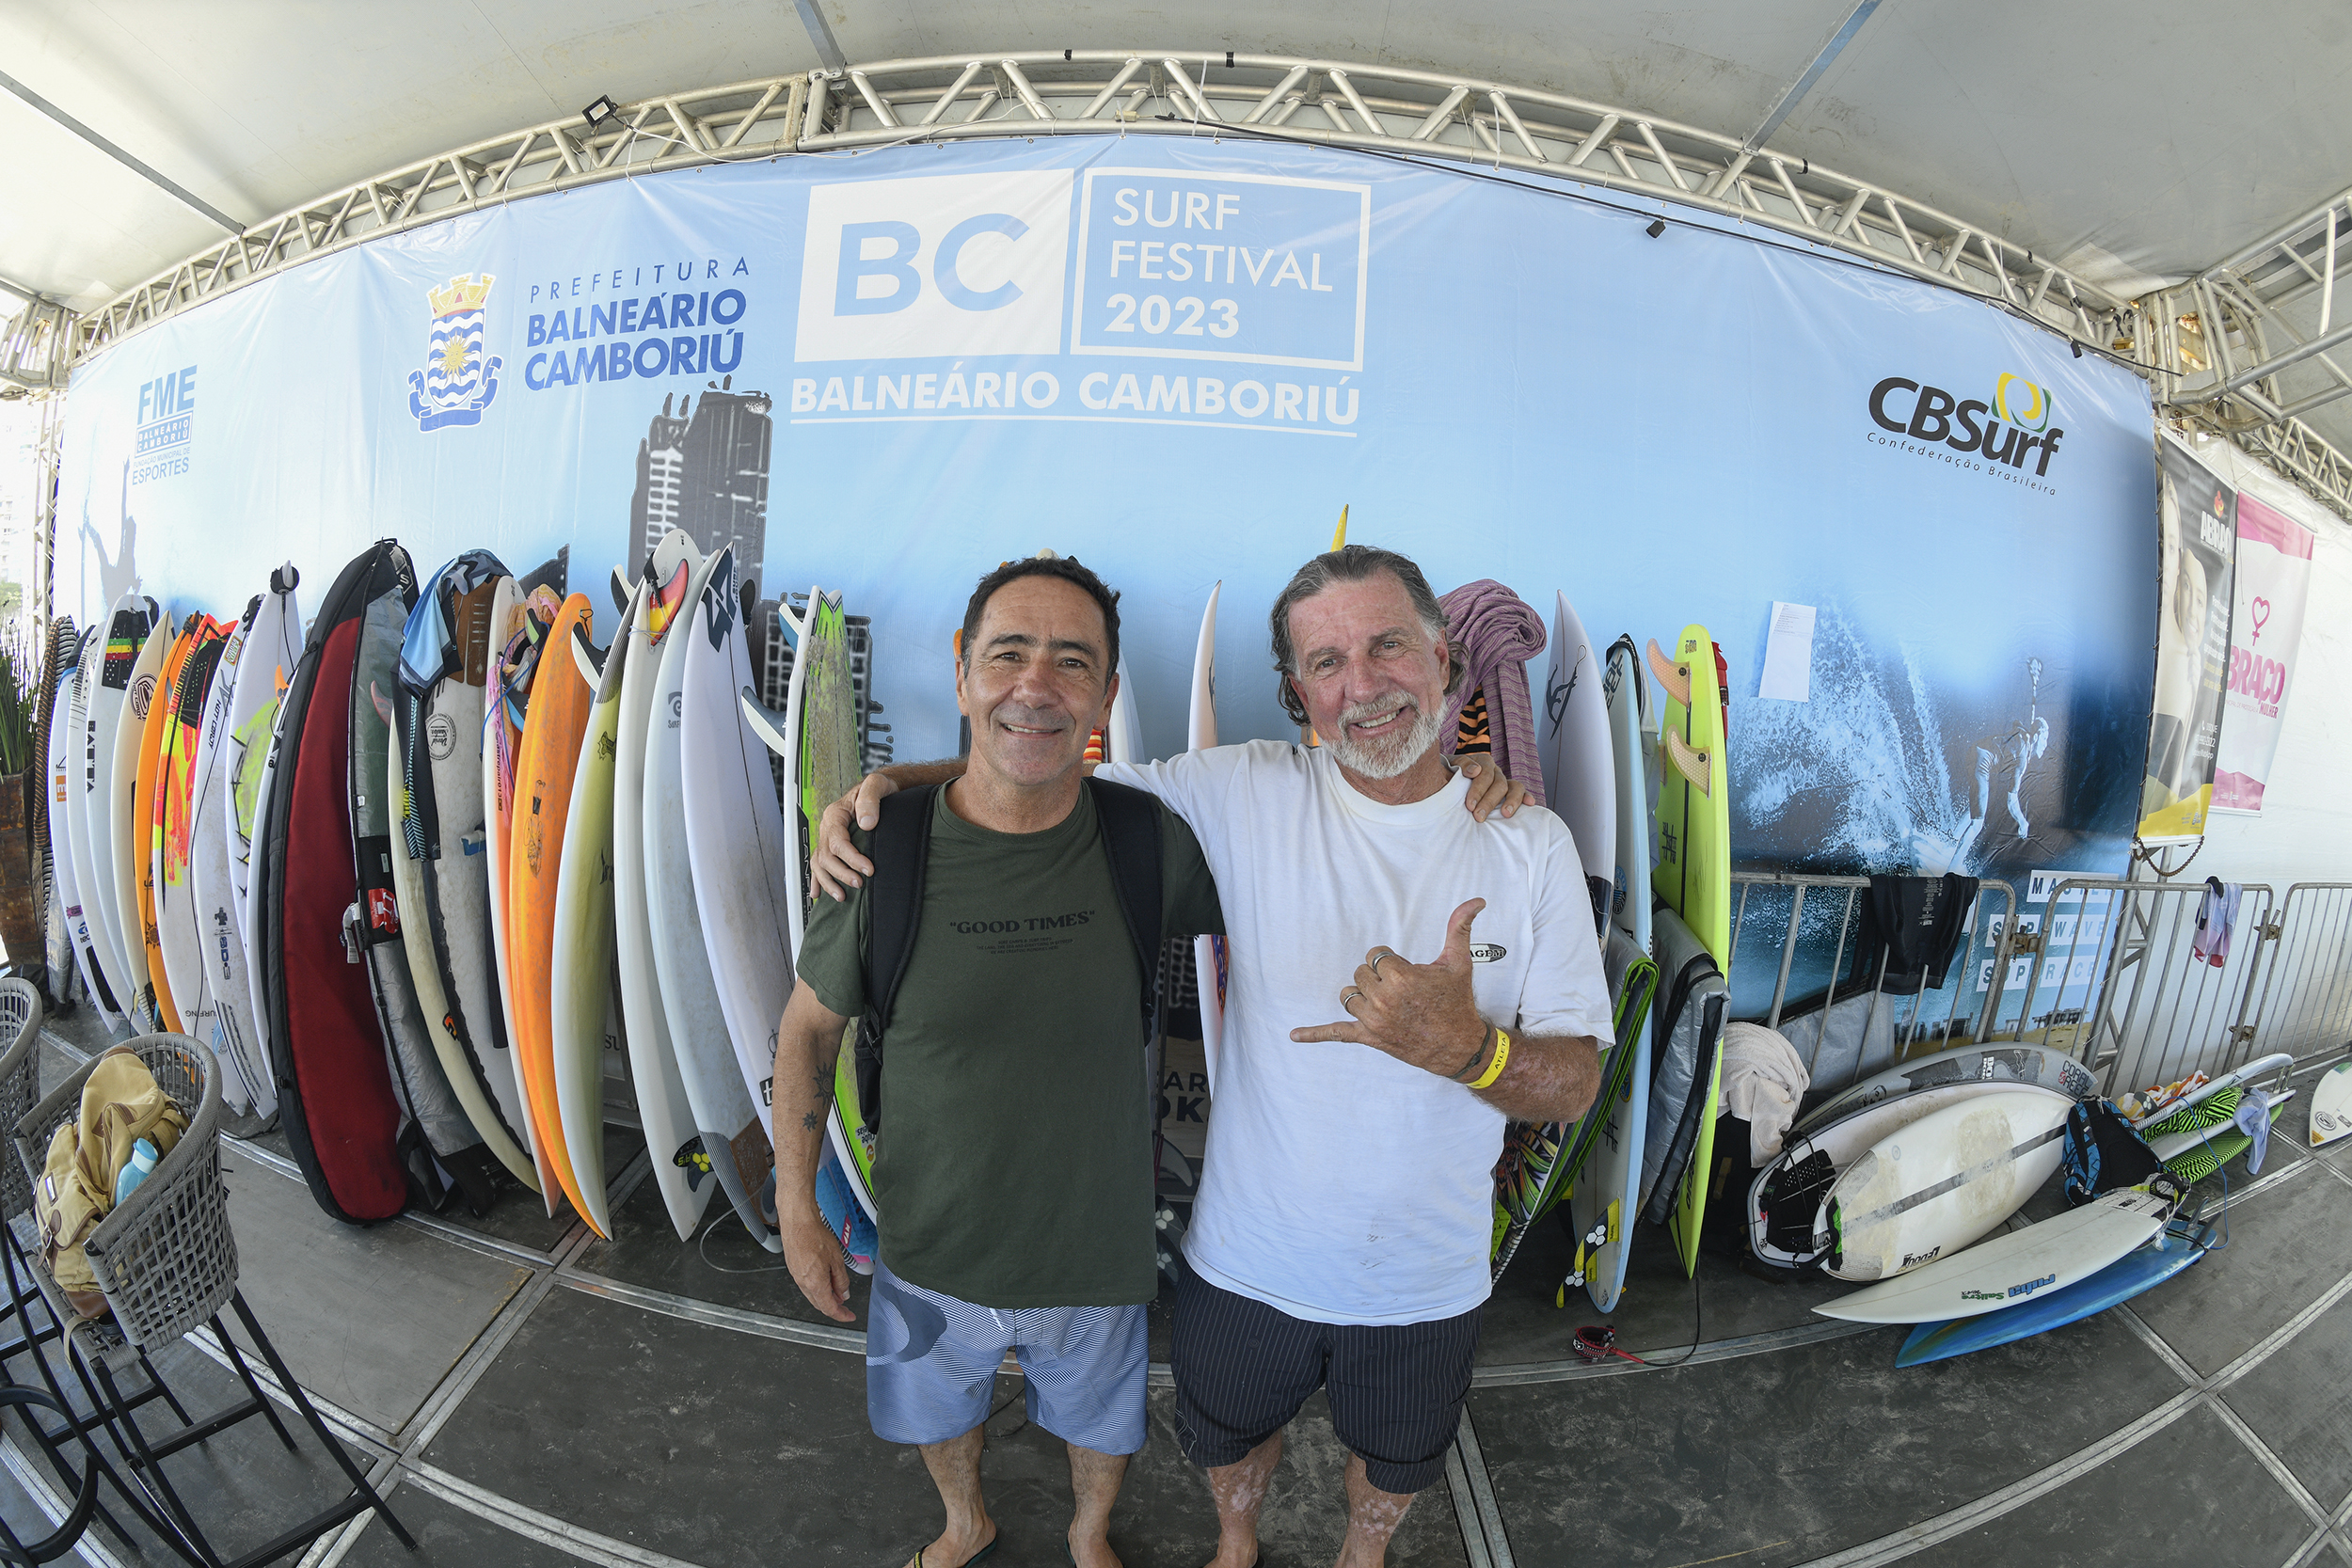 BC SURF FESTIVAL 2023